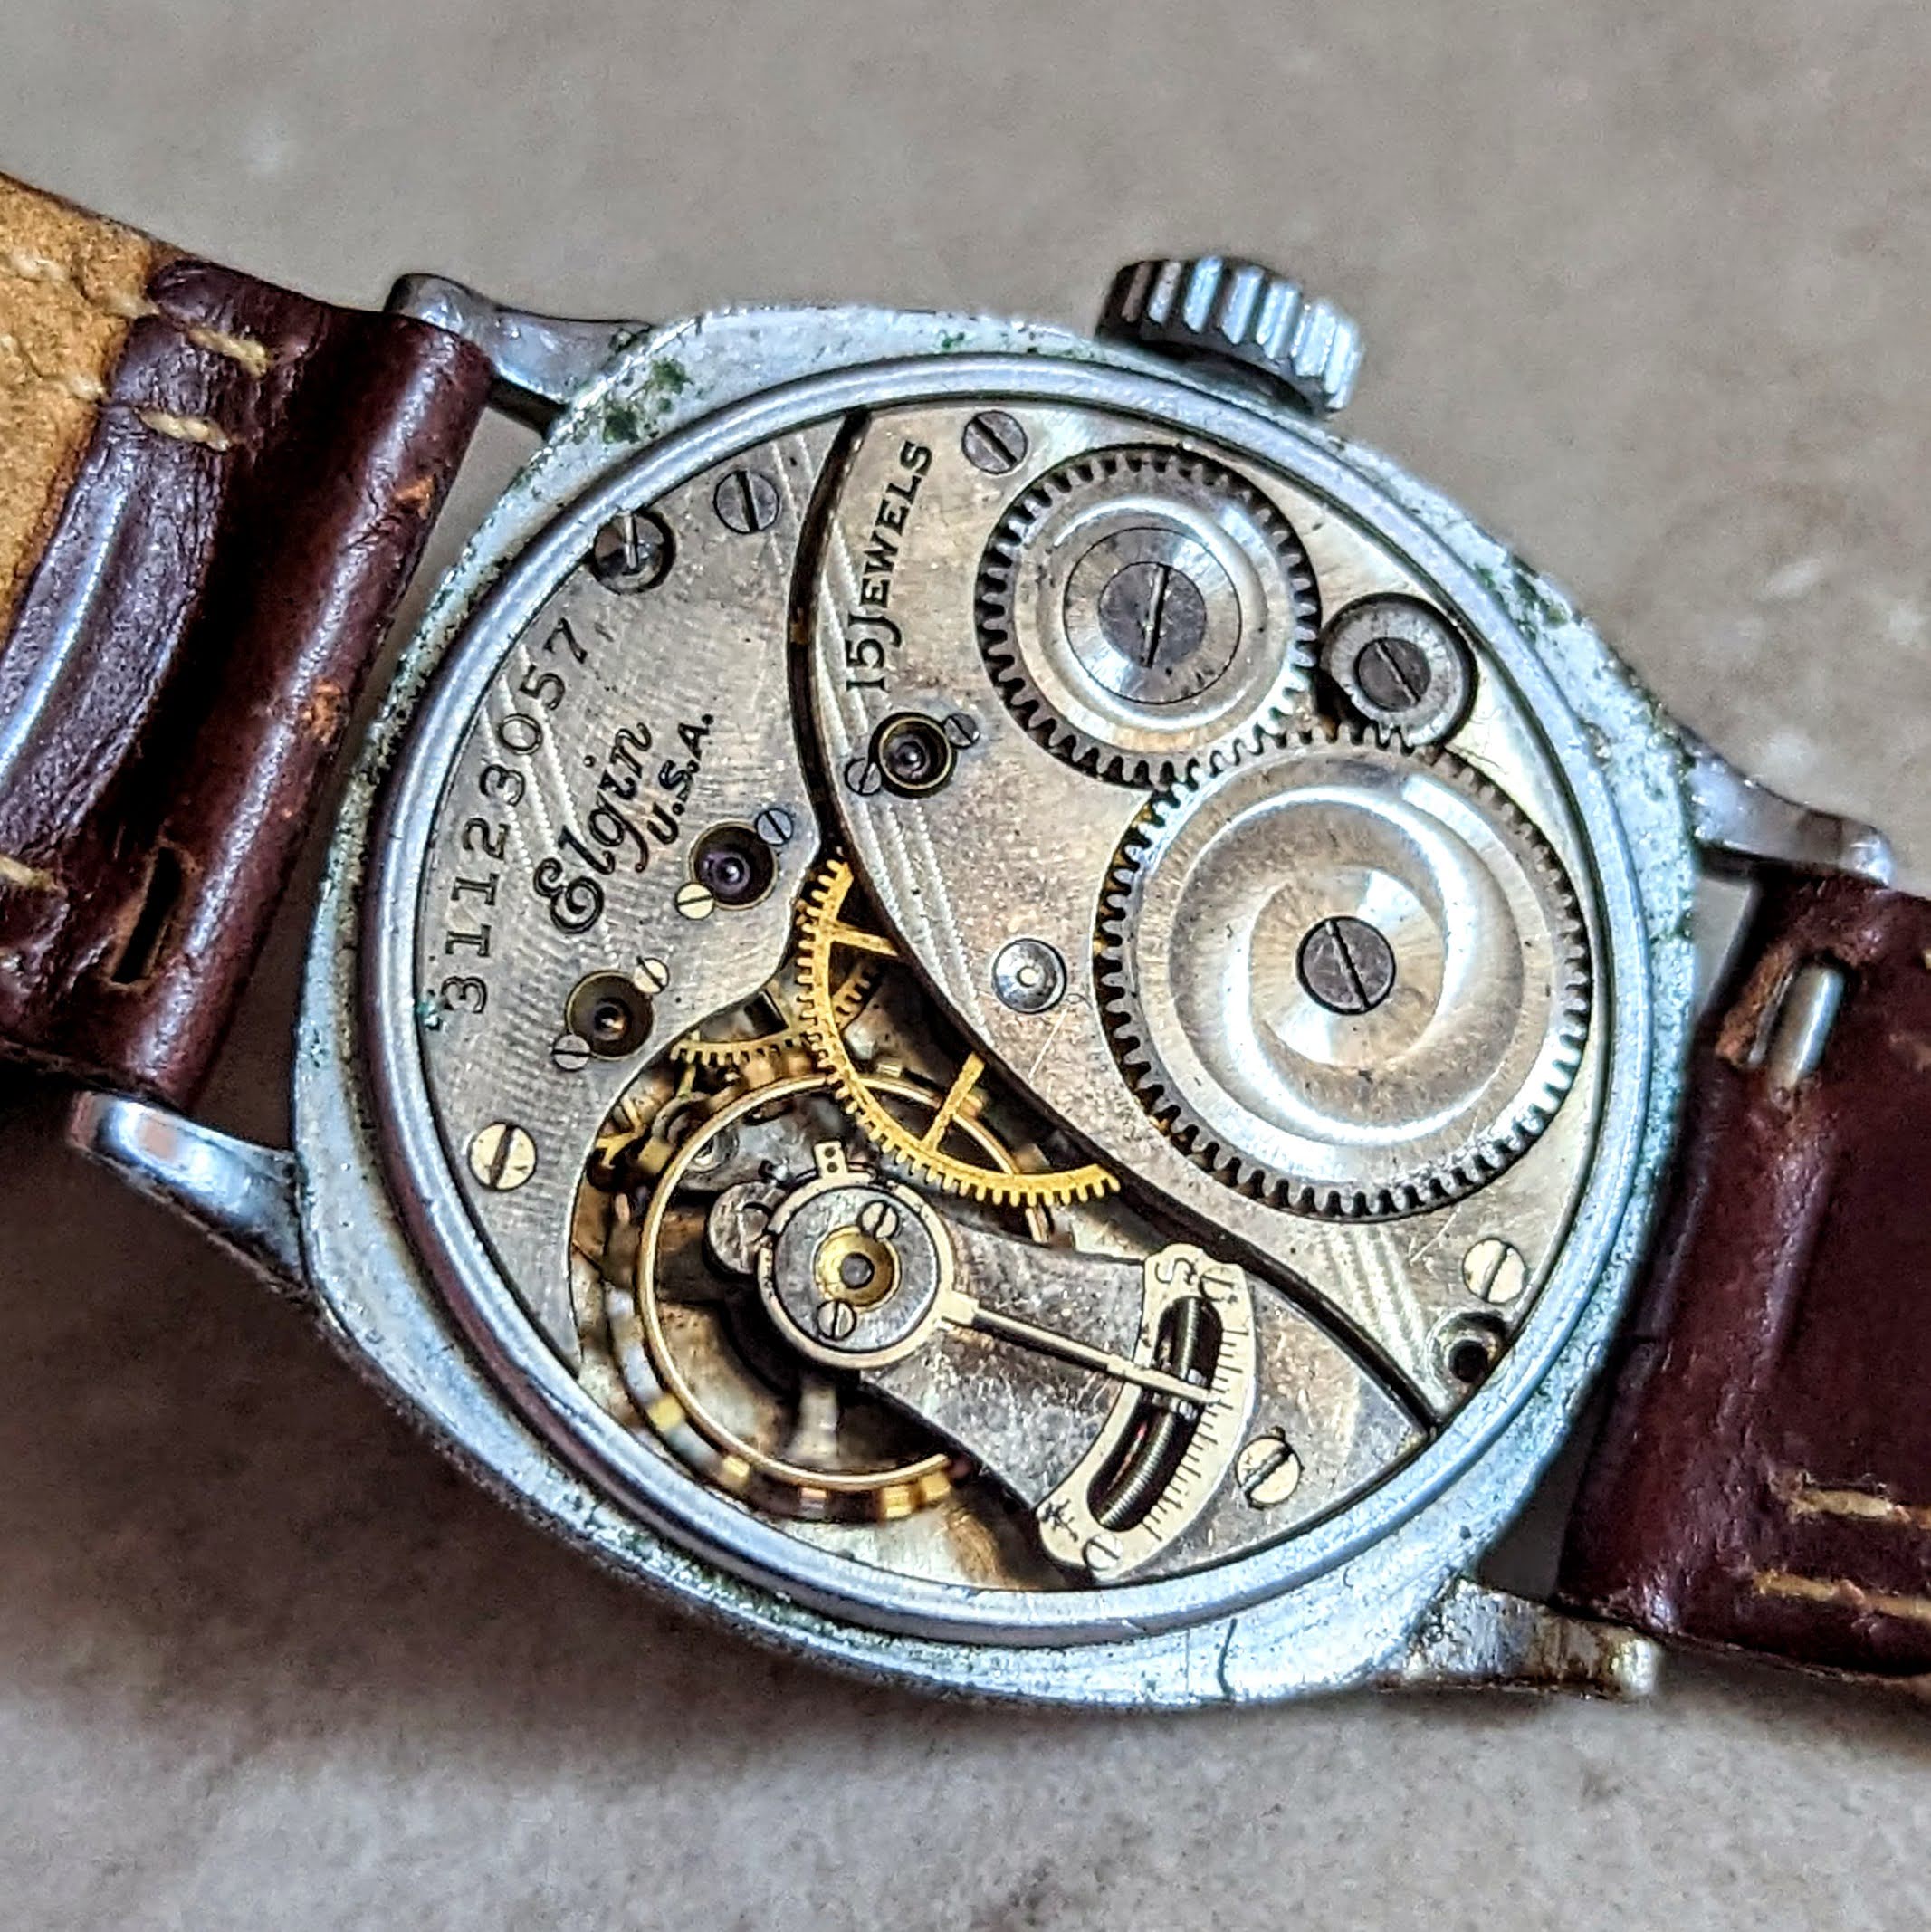 1928 ELGIN Art Deco Wristwatch Grade 464 Cushion Case  15 Jewels U.S.A. Made Watch